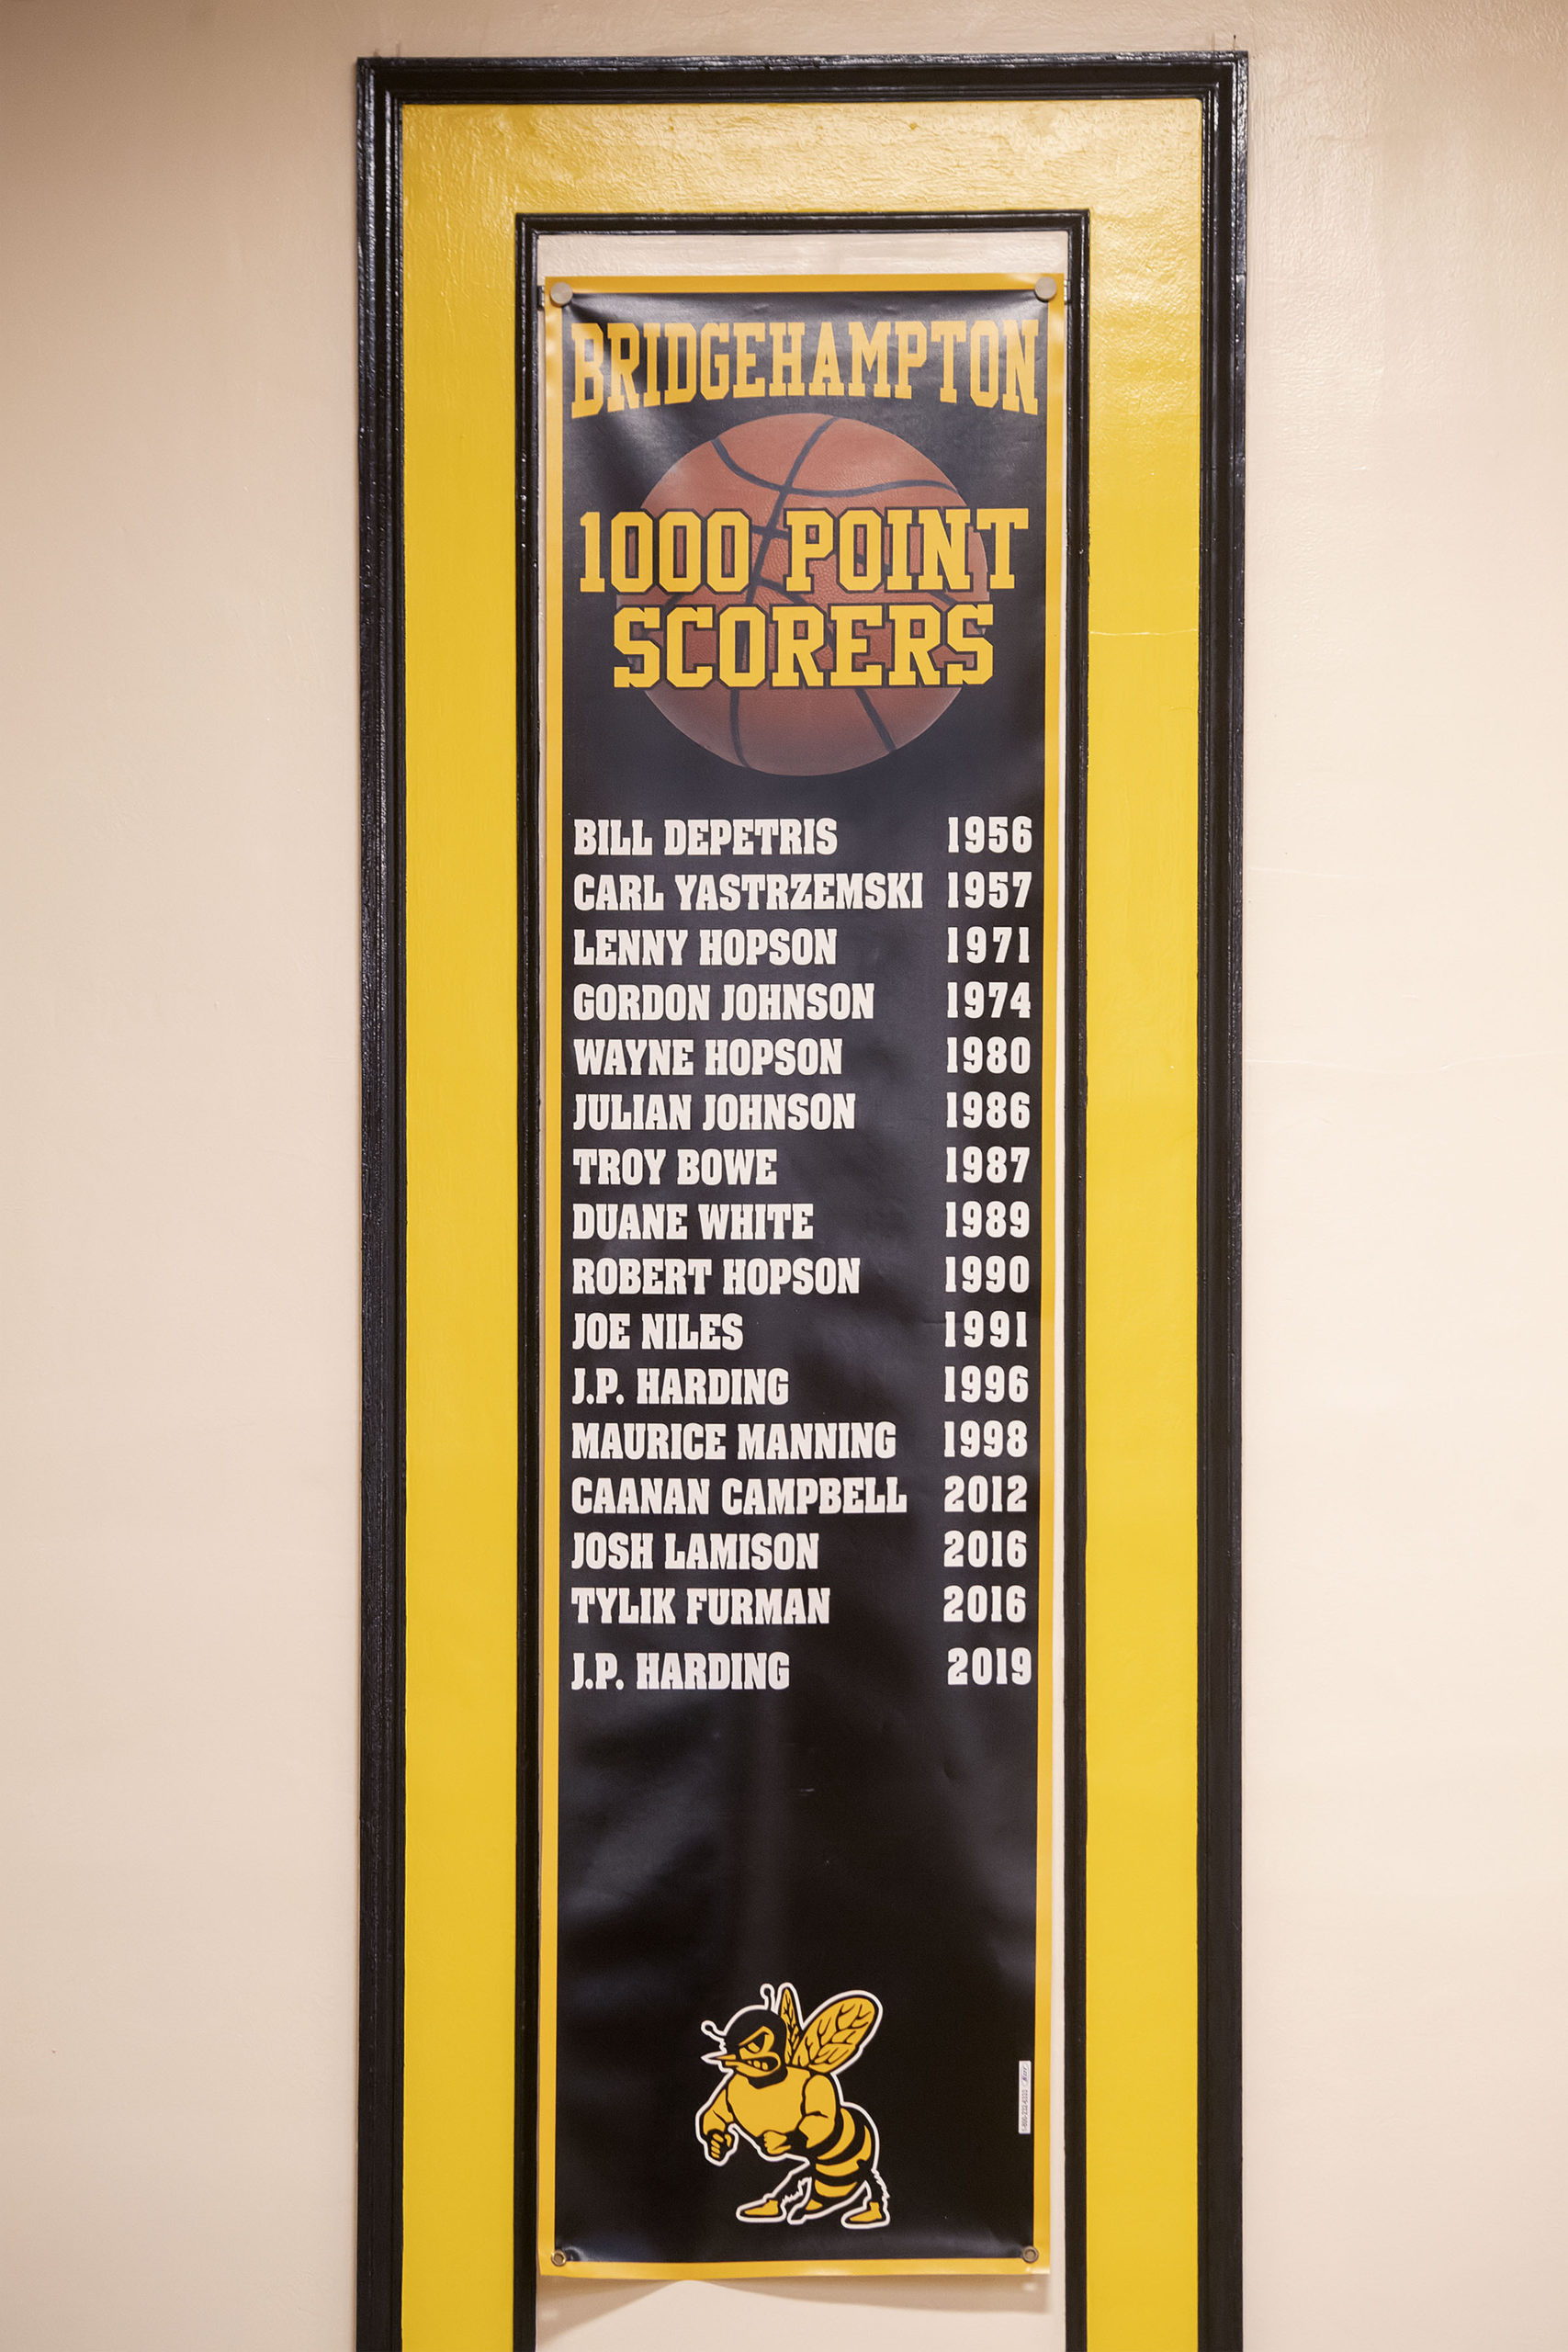 The 1,000-point scorers in Bridgehampton history.